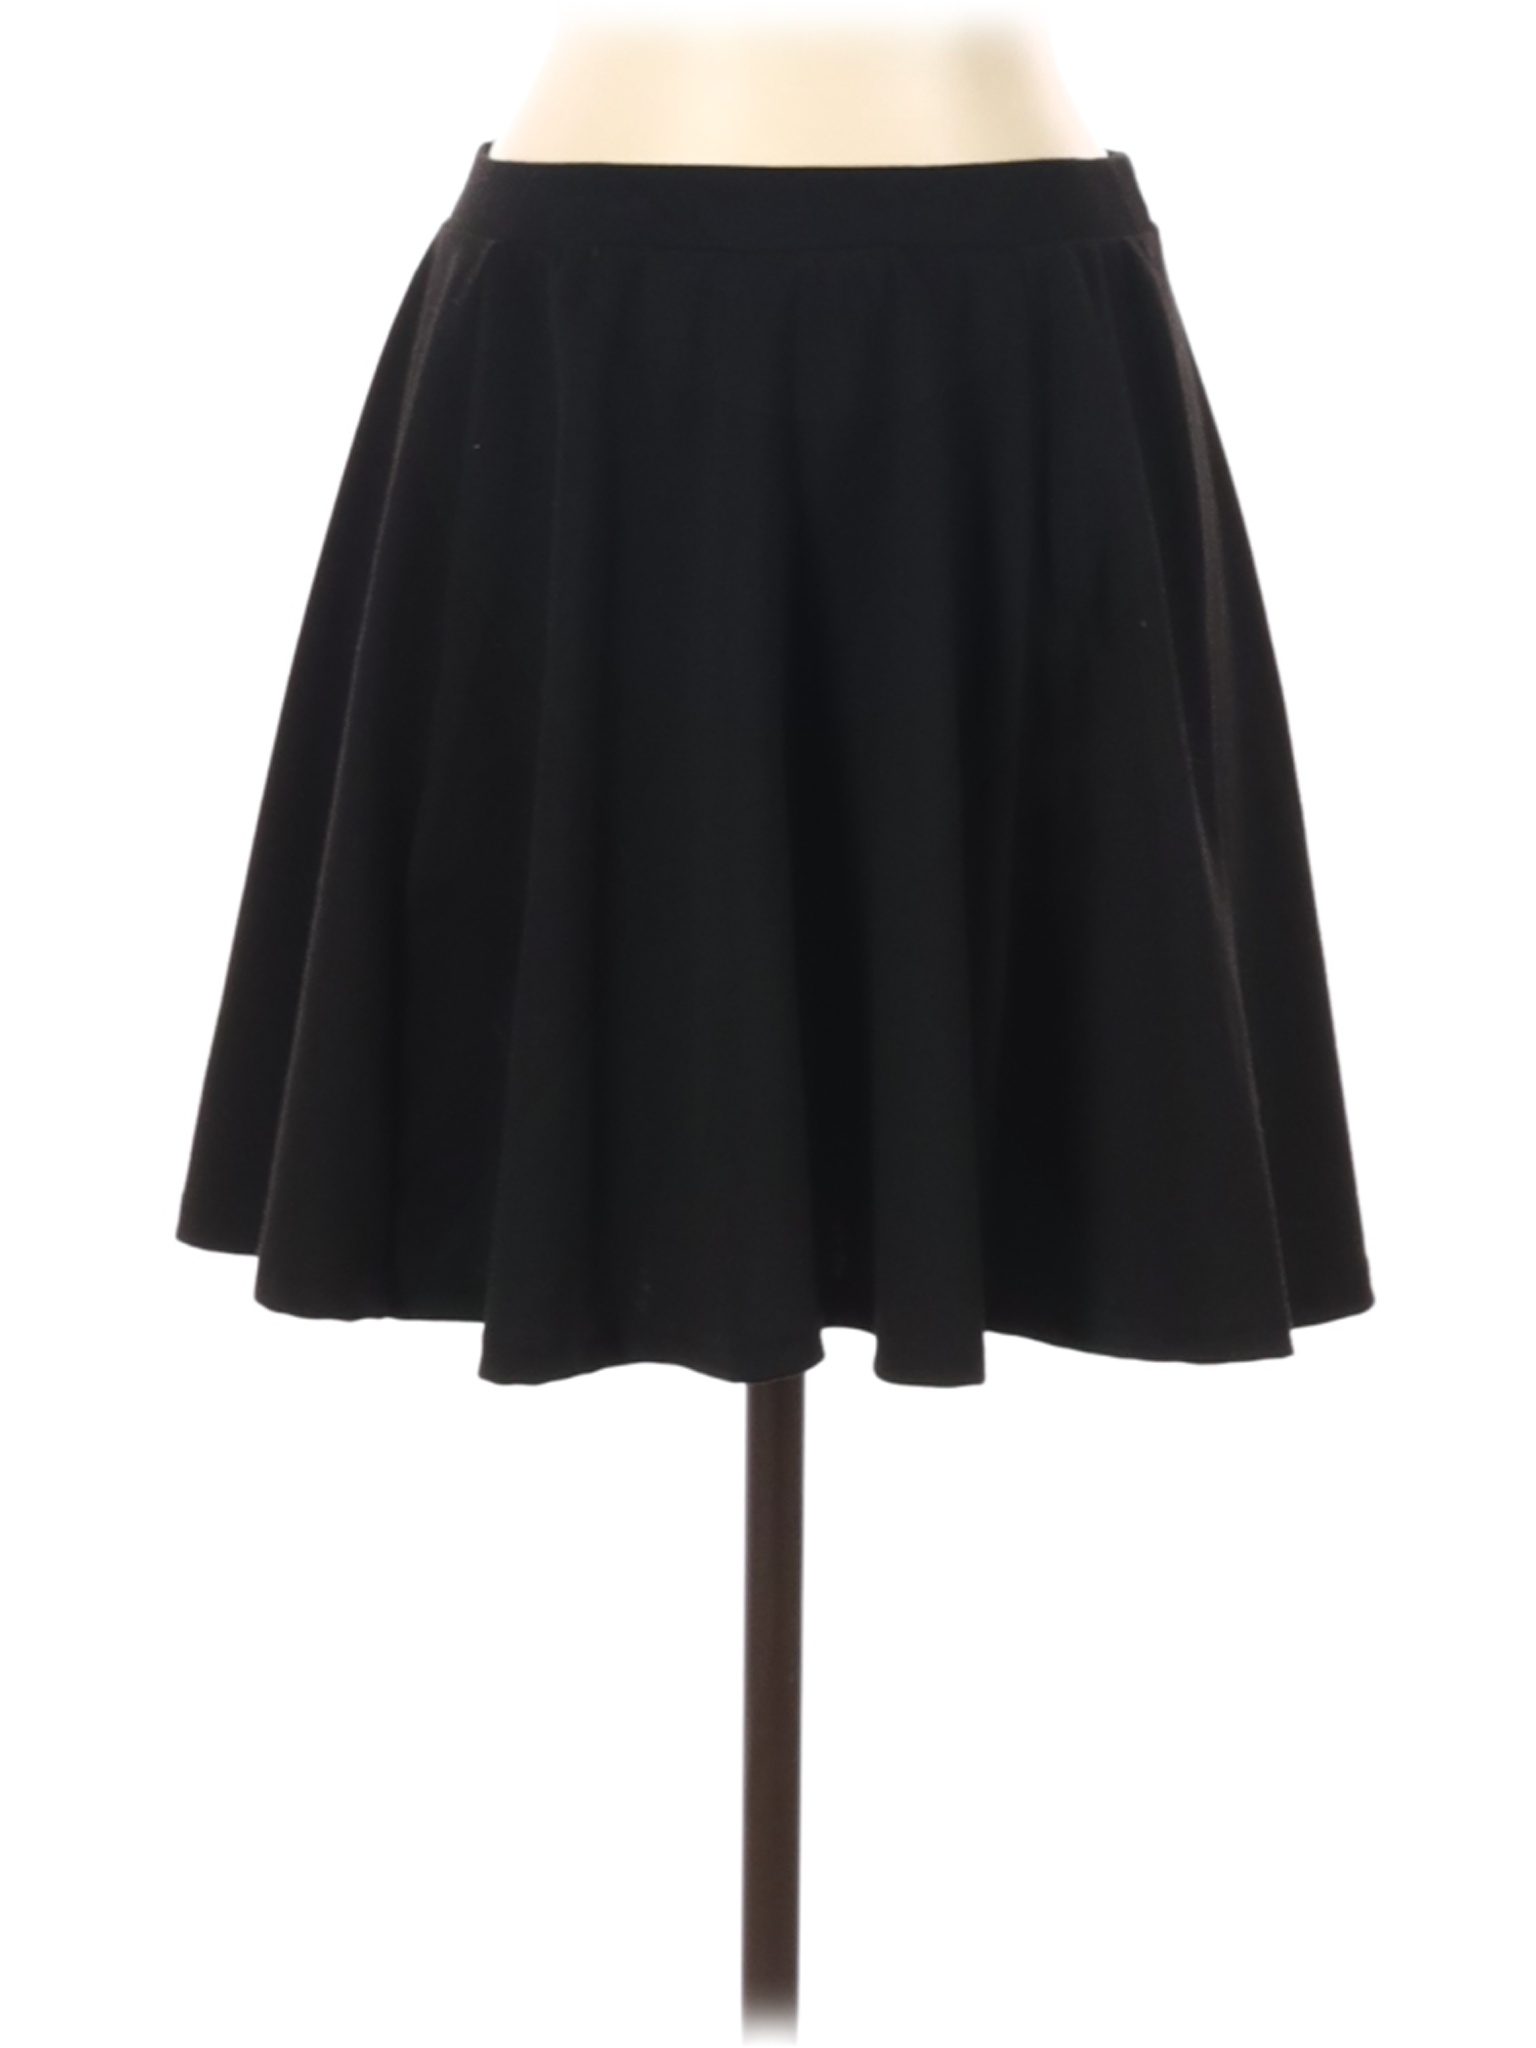 Cotton On Women Black Casual Skirt S | eBay